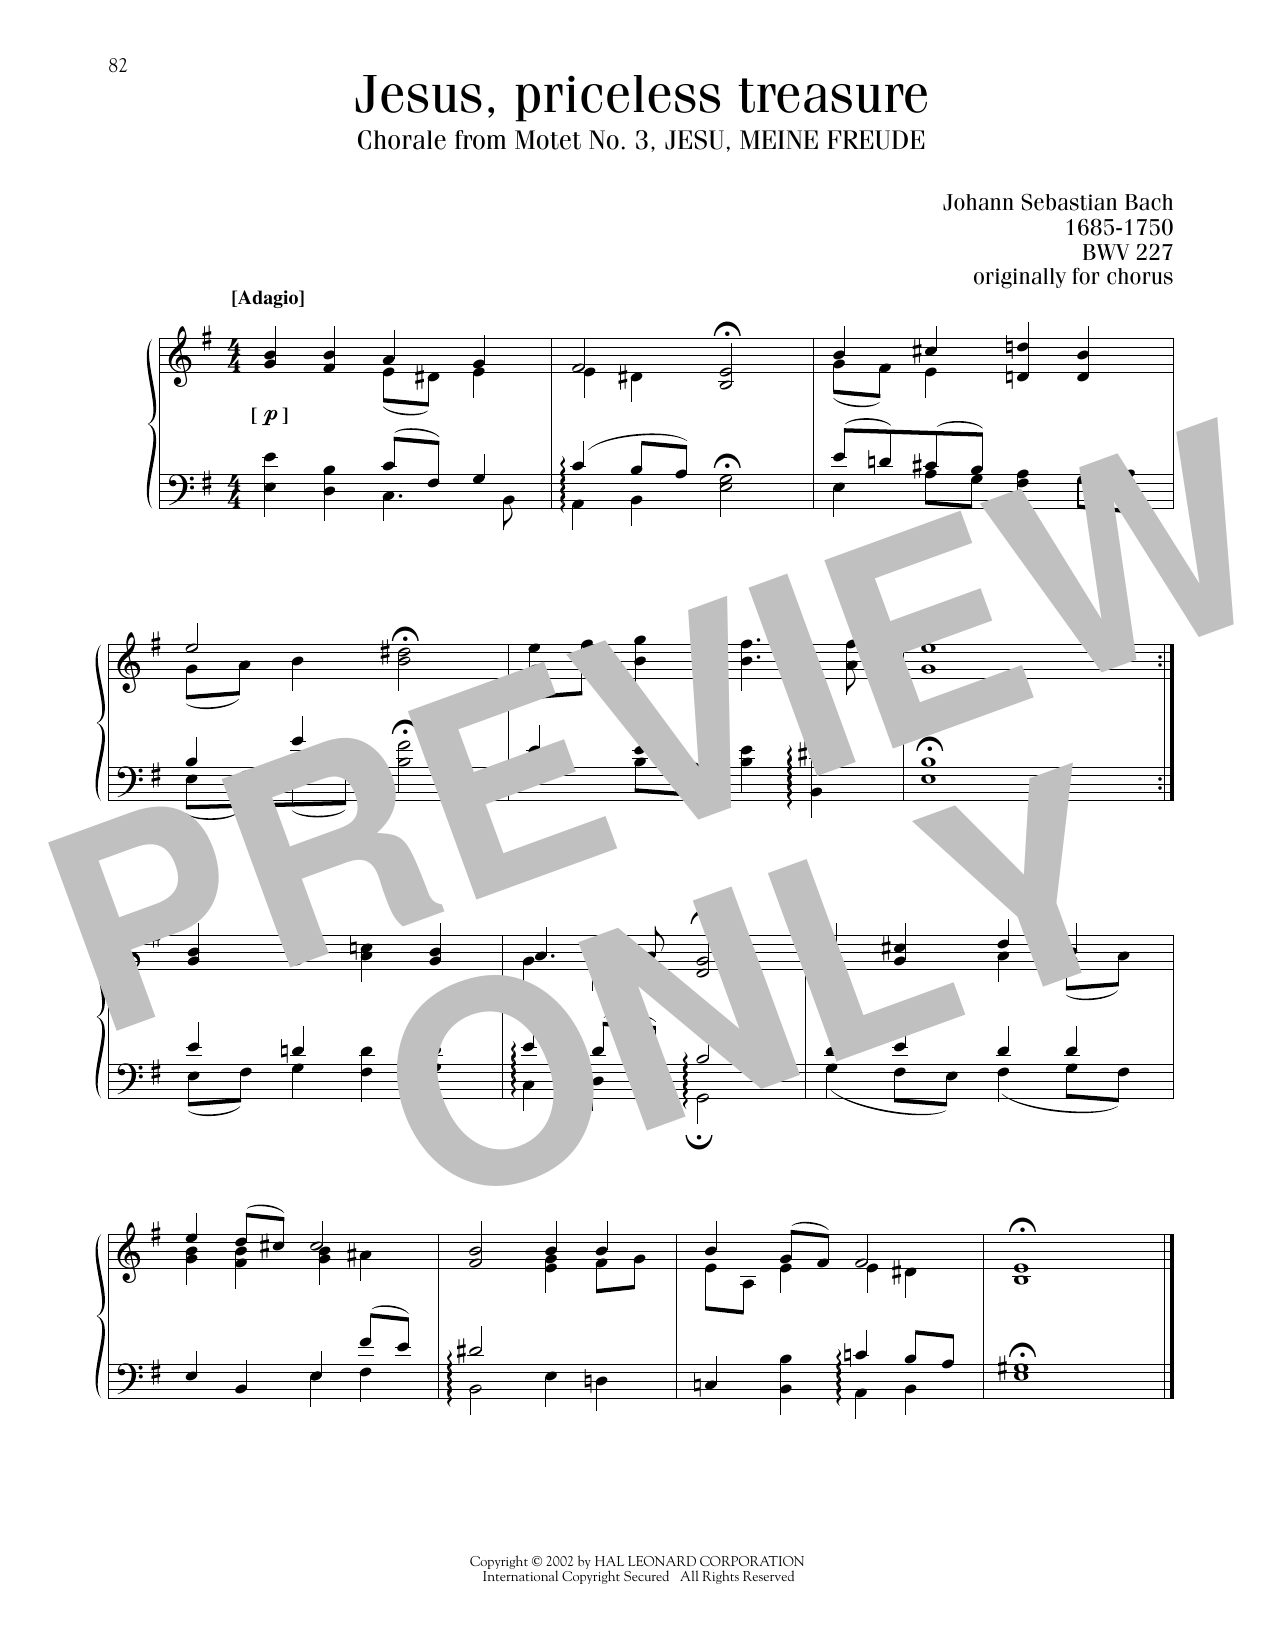 Johann Sebastian Bach Jesus, Priceless Treasure (Jesu, Meine Freude) Sheet Music Notes & Chords for Piano Solo - Download or Print PDF